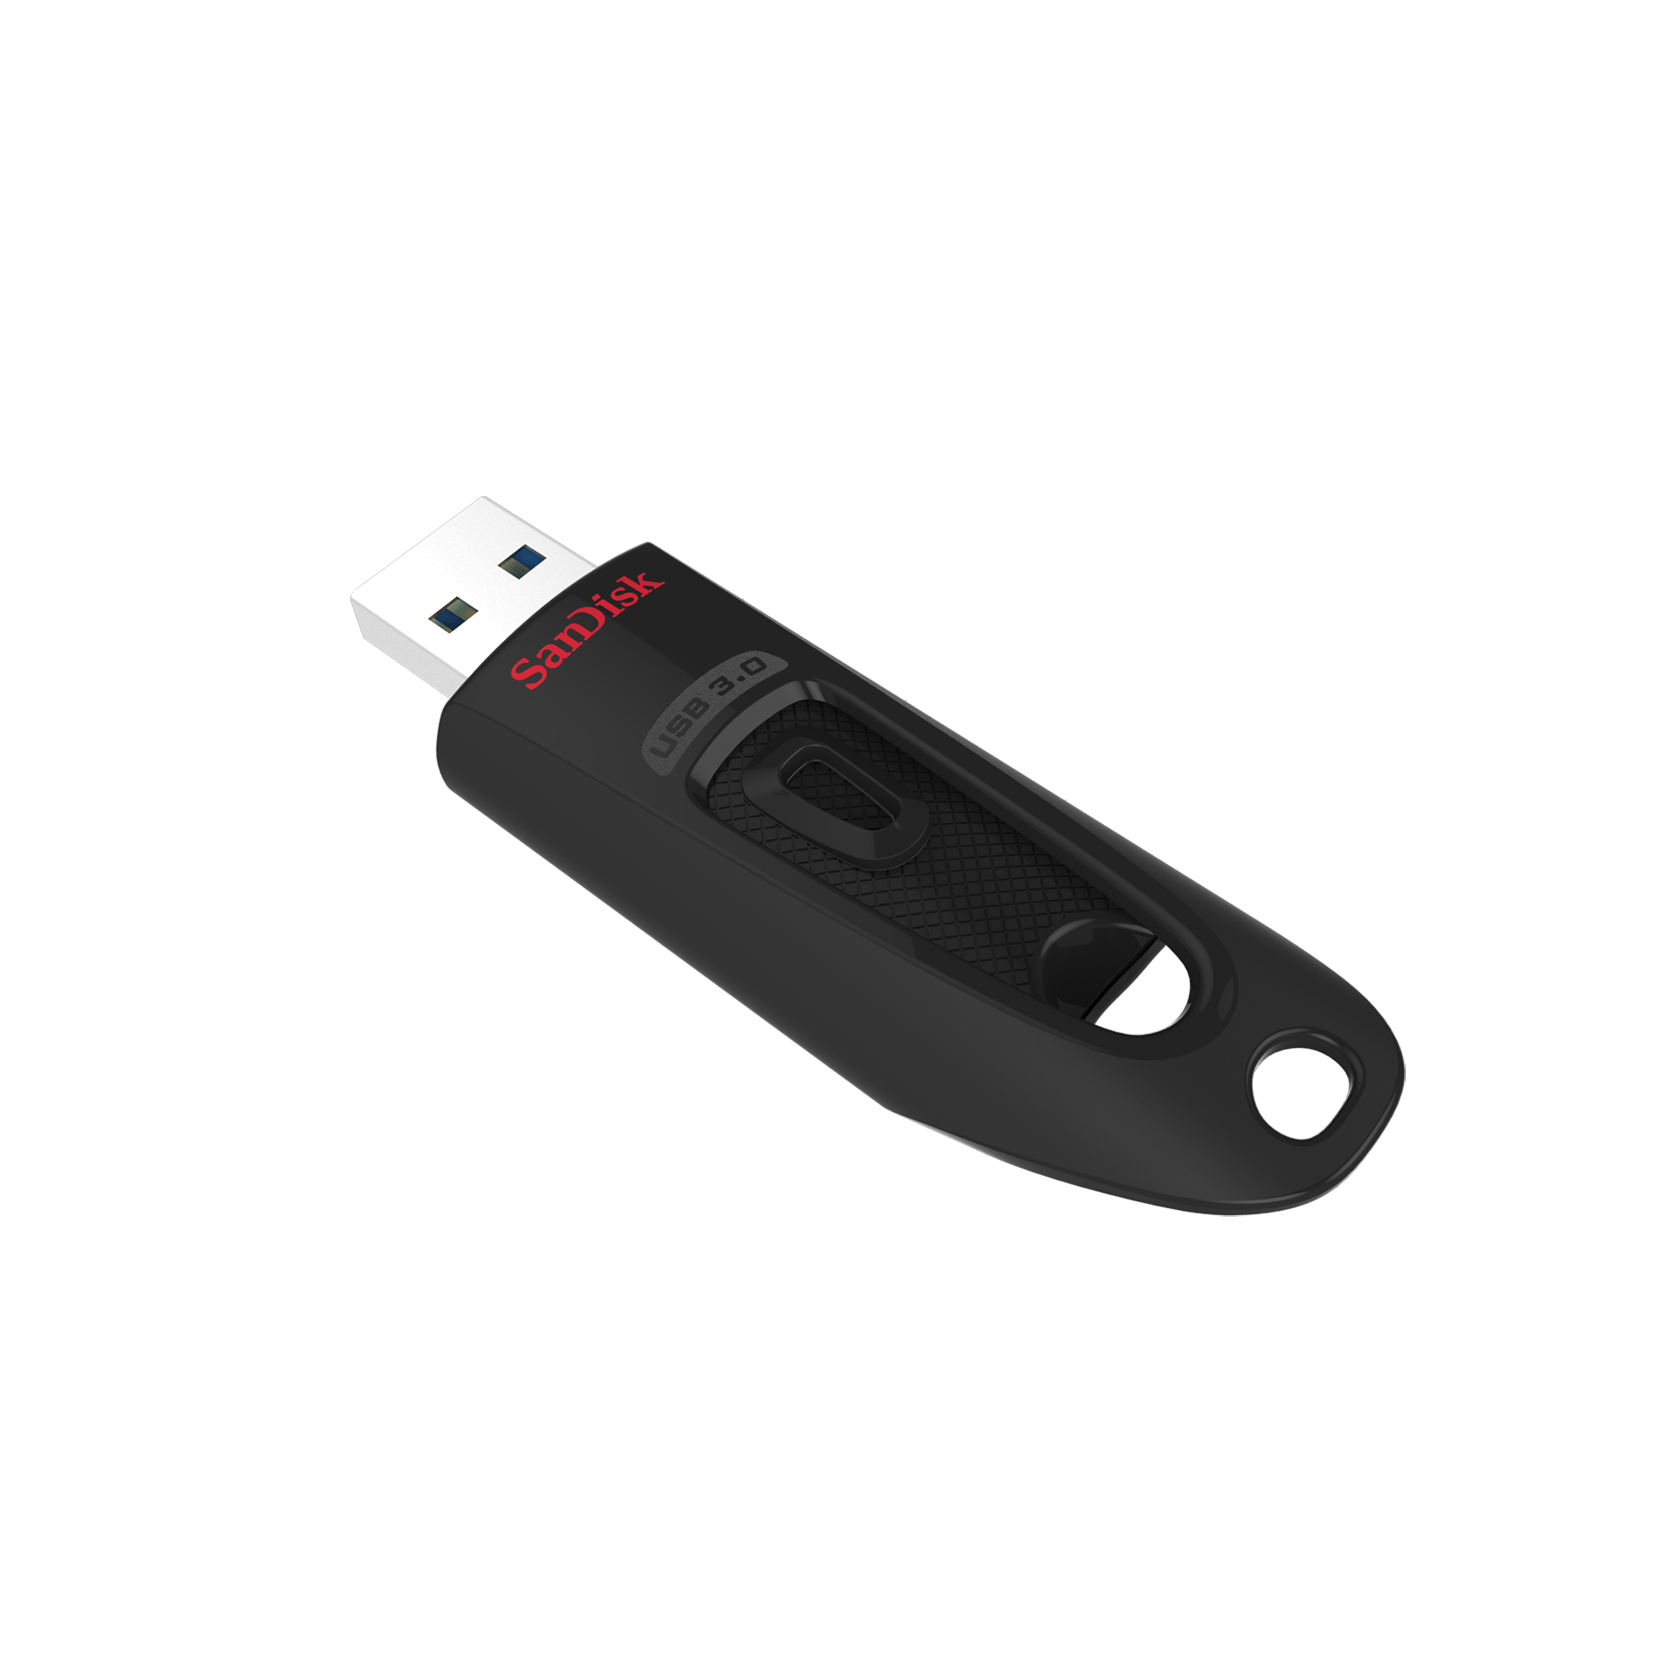 disk i-flash driver hd u-disk 32g usb flash drive for iphone ipad mac/pc ios light pen drive